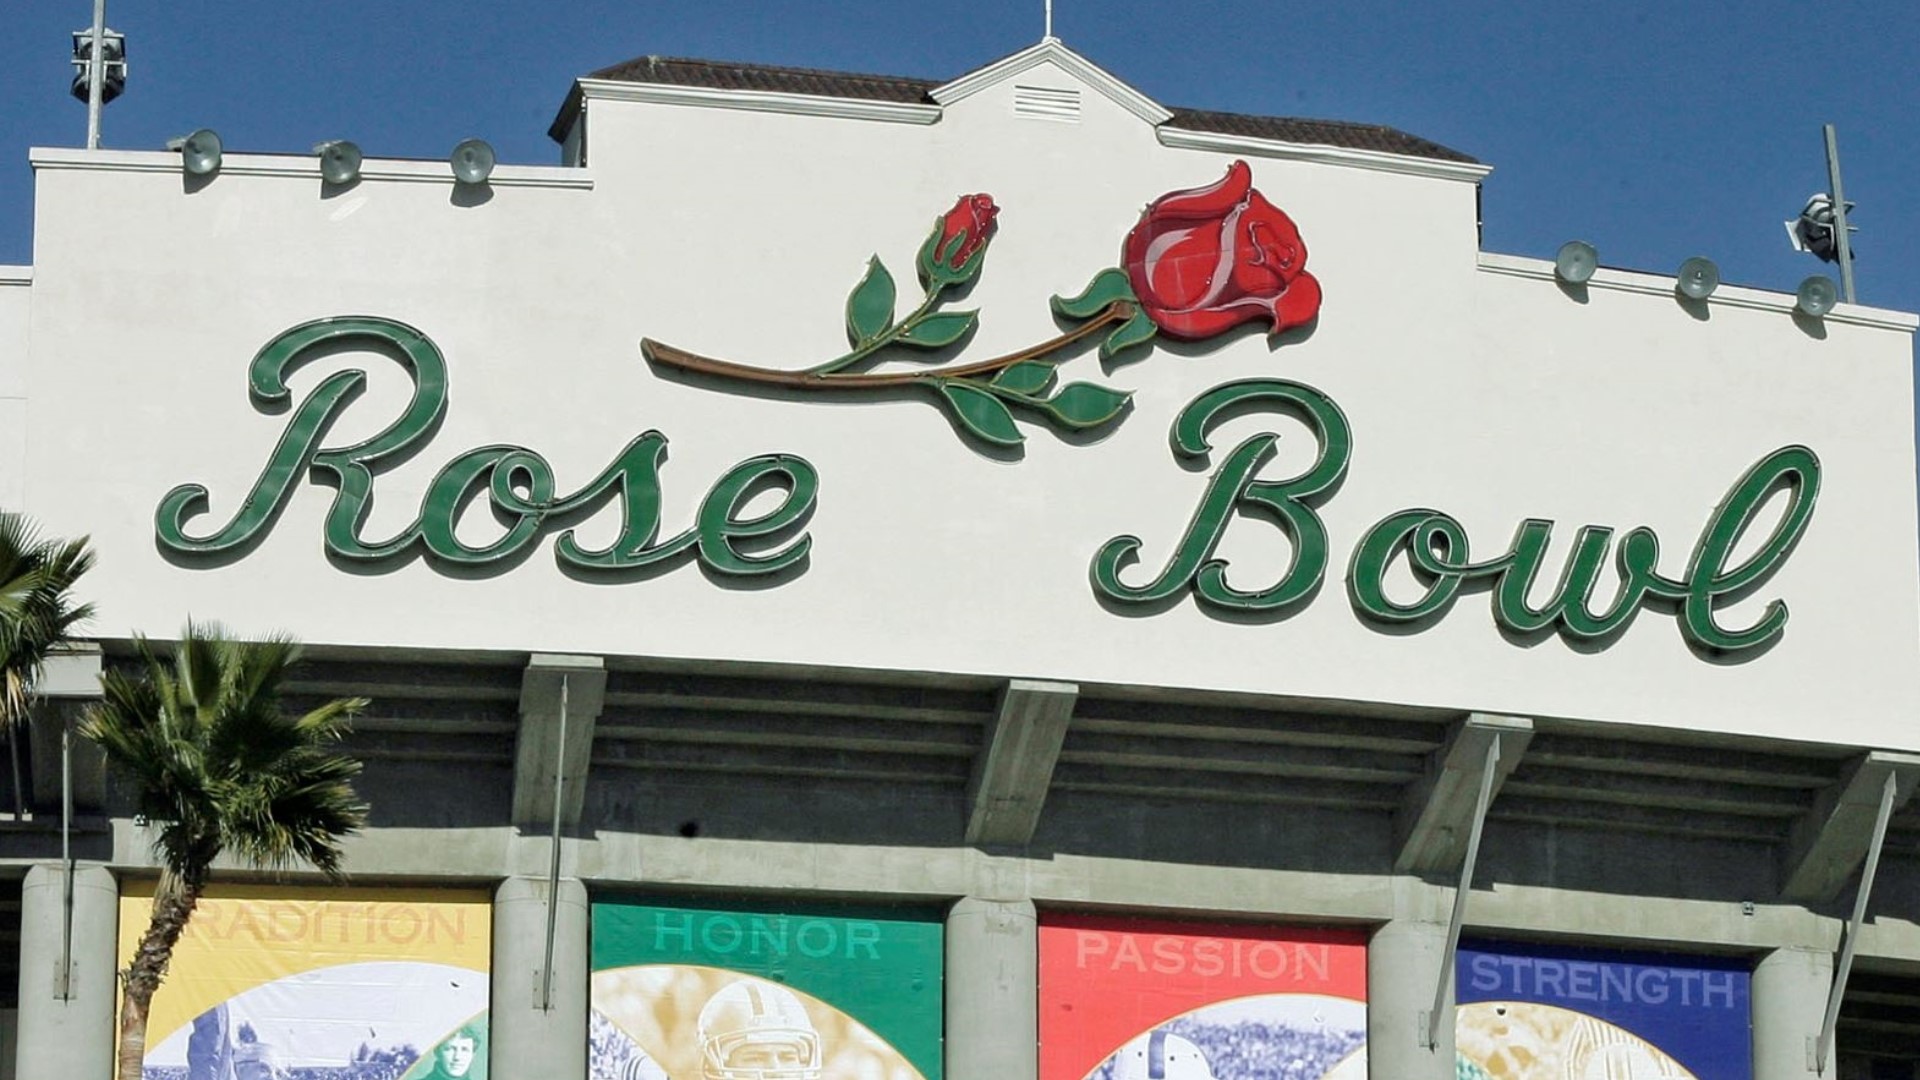 The Ohio State Buckeyes will take on Utah in the Rose Bowl on Jan. 1 in Pasadena, California.